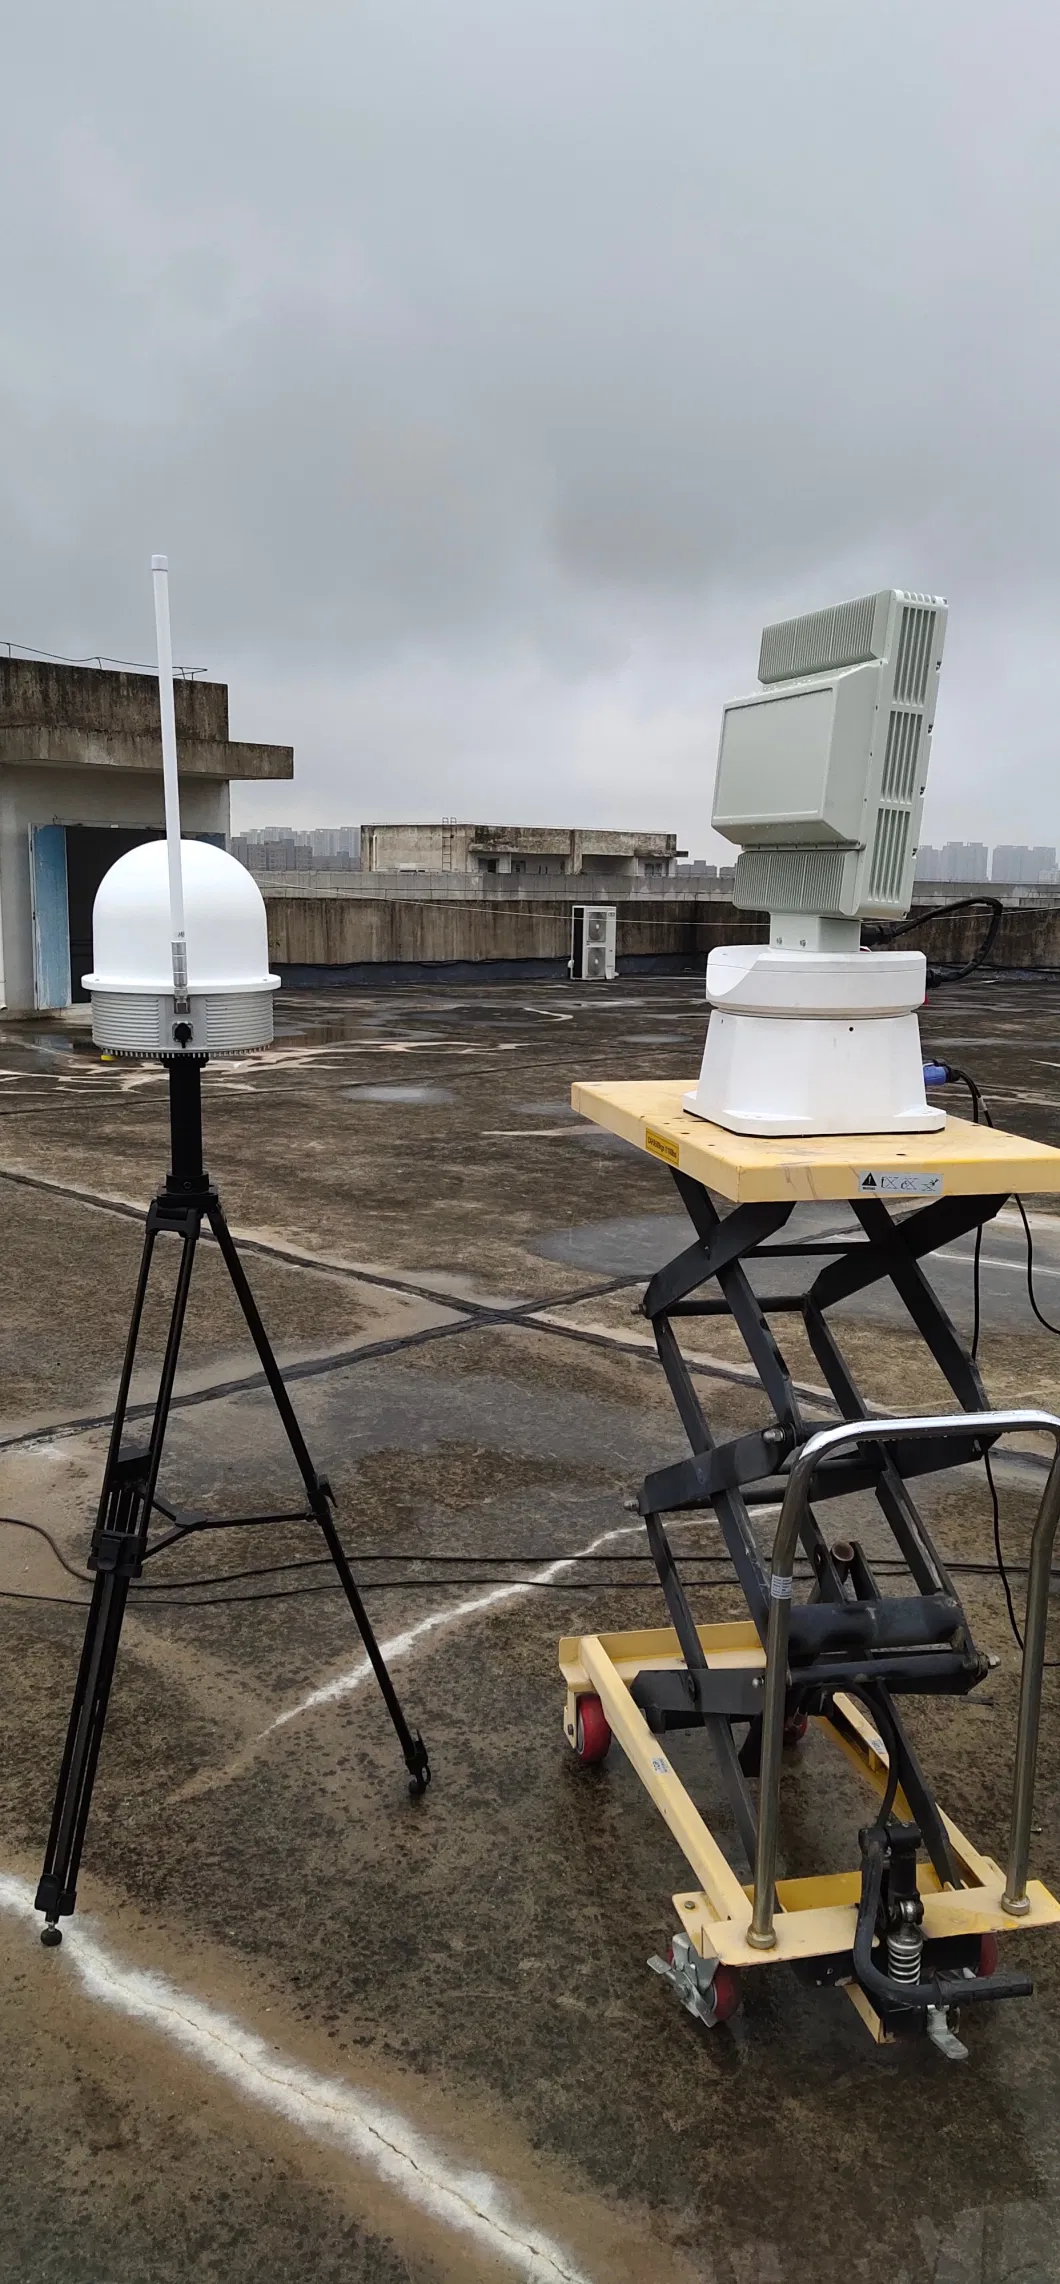 Radar Detector with High Accuracy Sensing